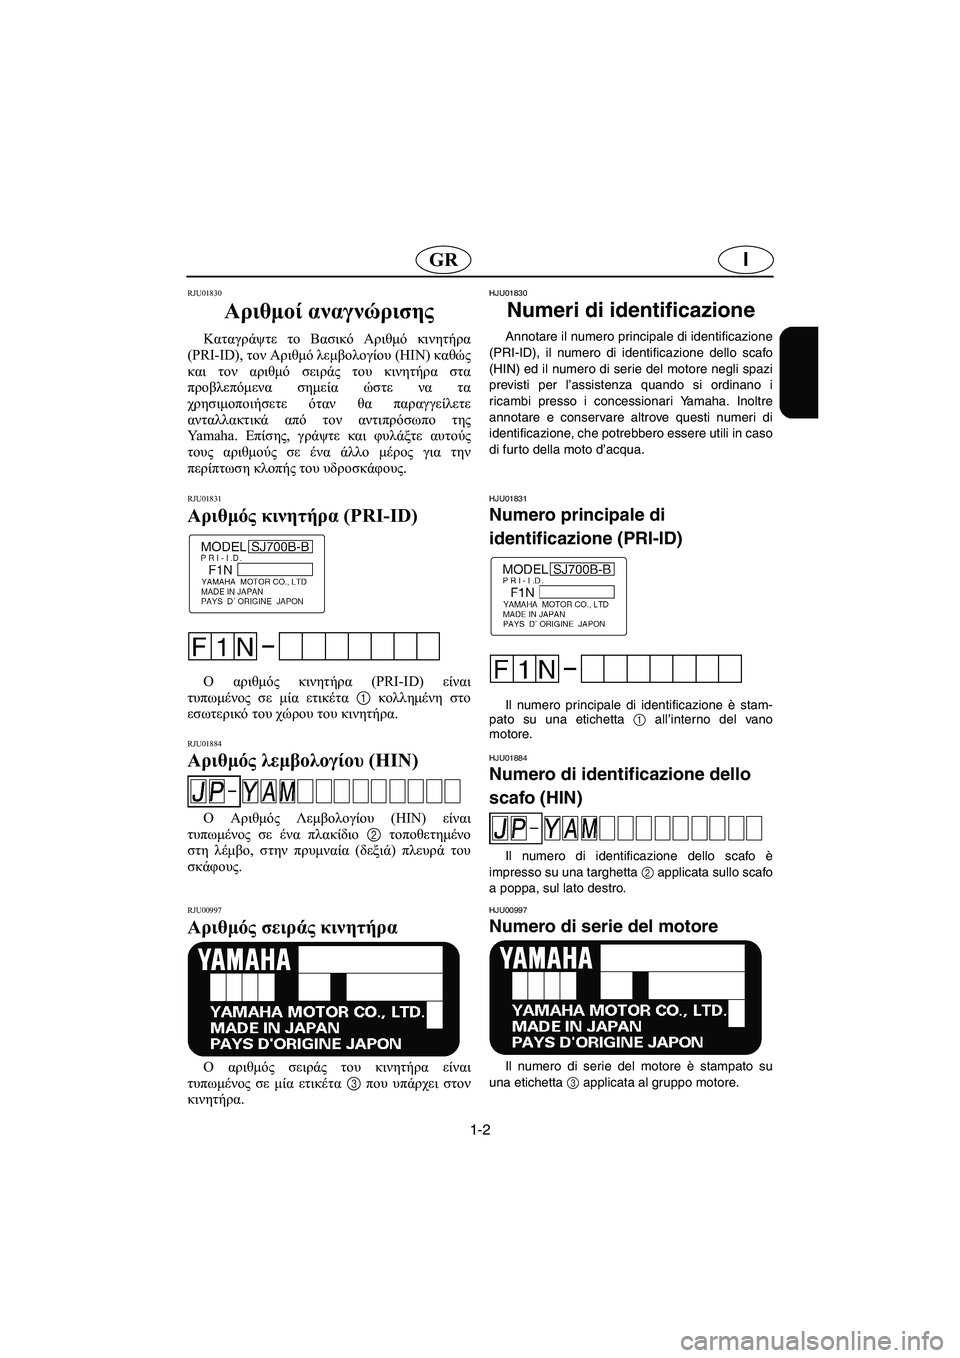 YAMAHA SUPERJET 2003  Manuale duso (in Italian) 1-2
IGR
RJU01830 
Αριθμοί αναγνώρισης  
Καταγράψτε το Βασικό Αριθμό κινητήρα
(PRI-ID), τον Αριθμό λεμβολογίου (HIN) καθώς
κ�